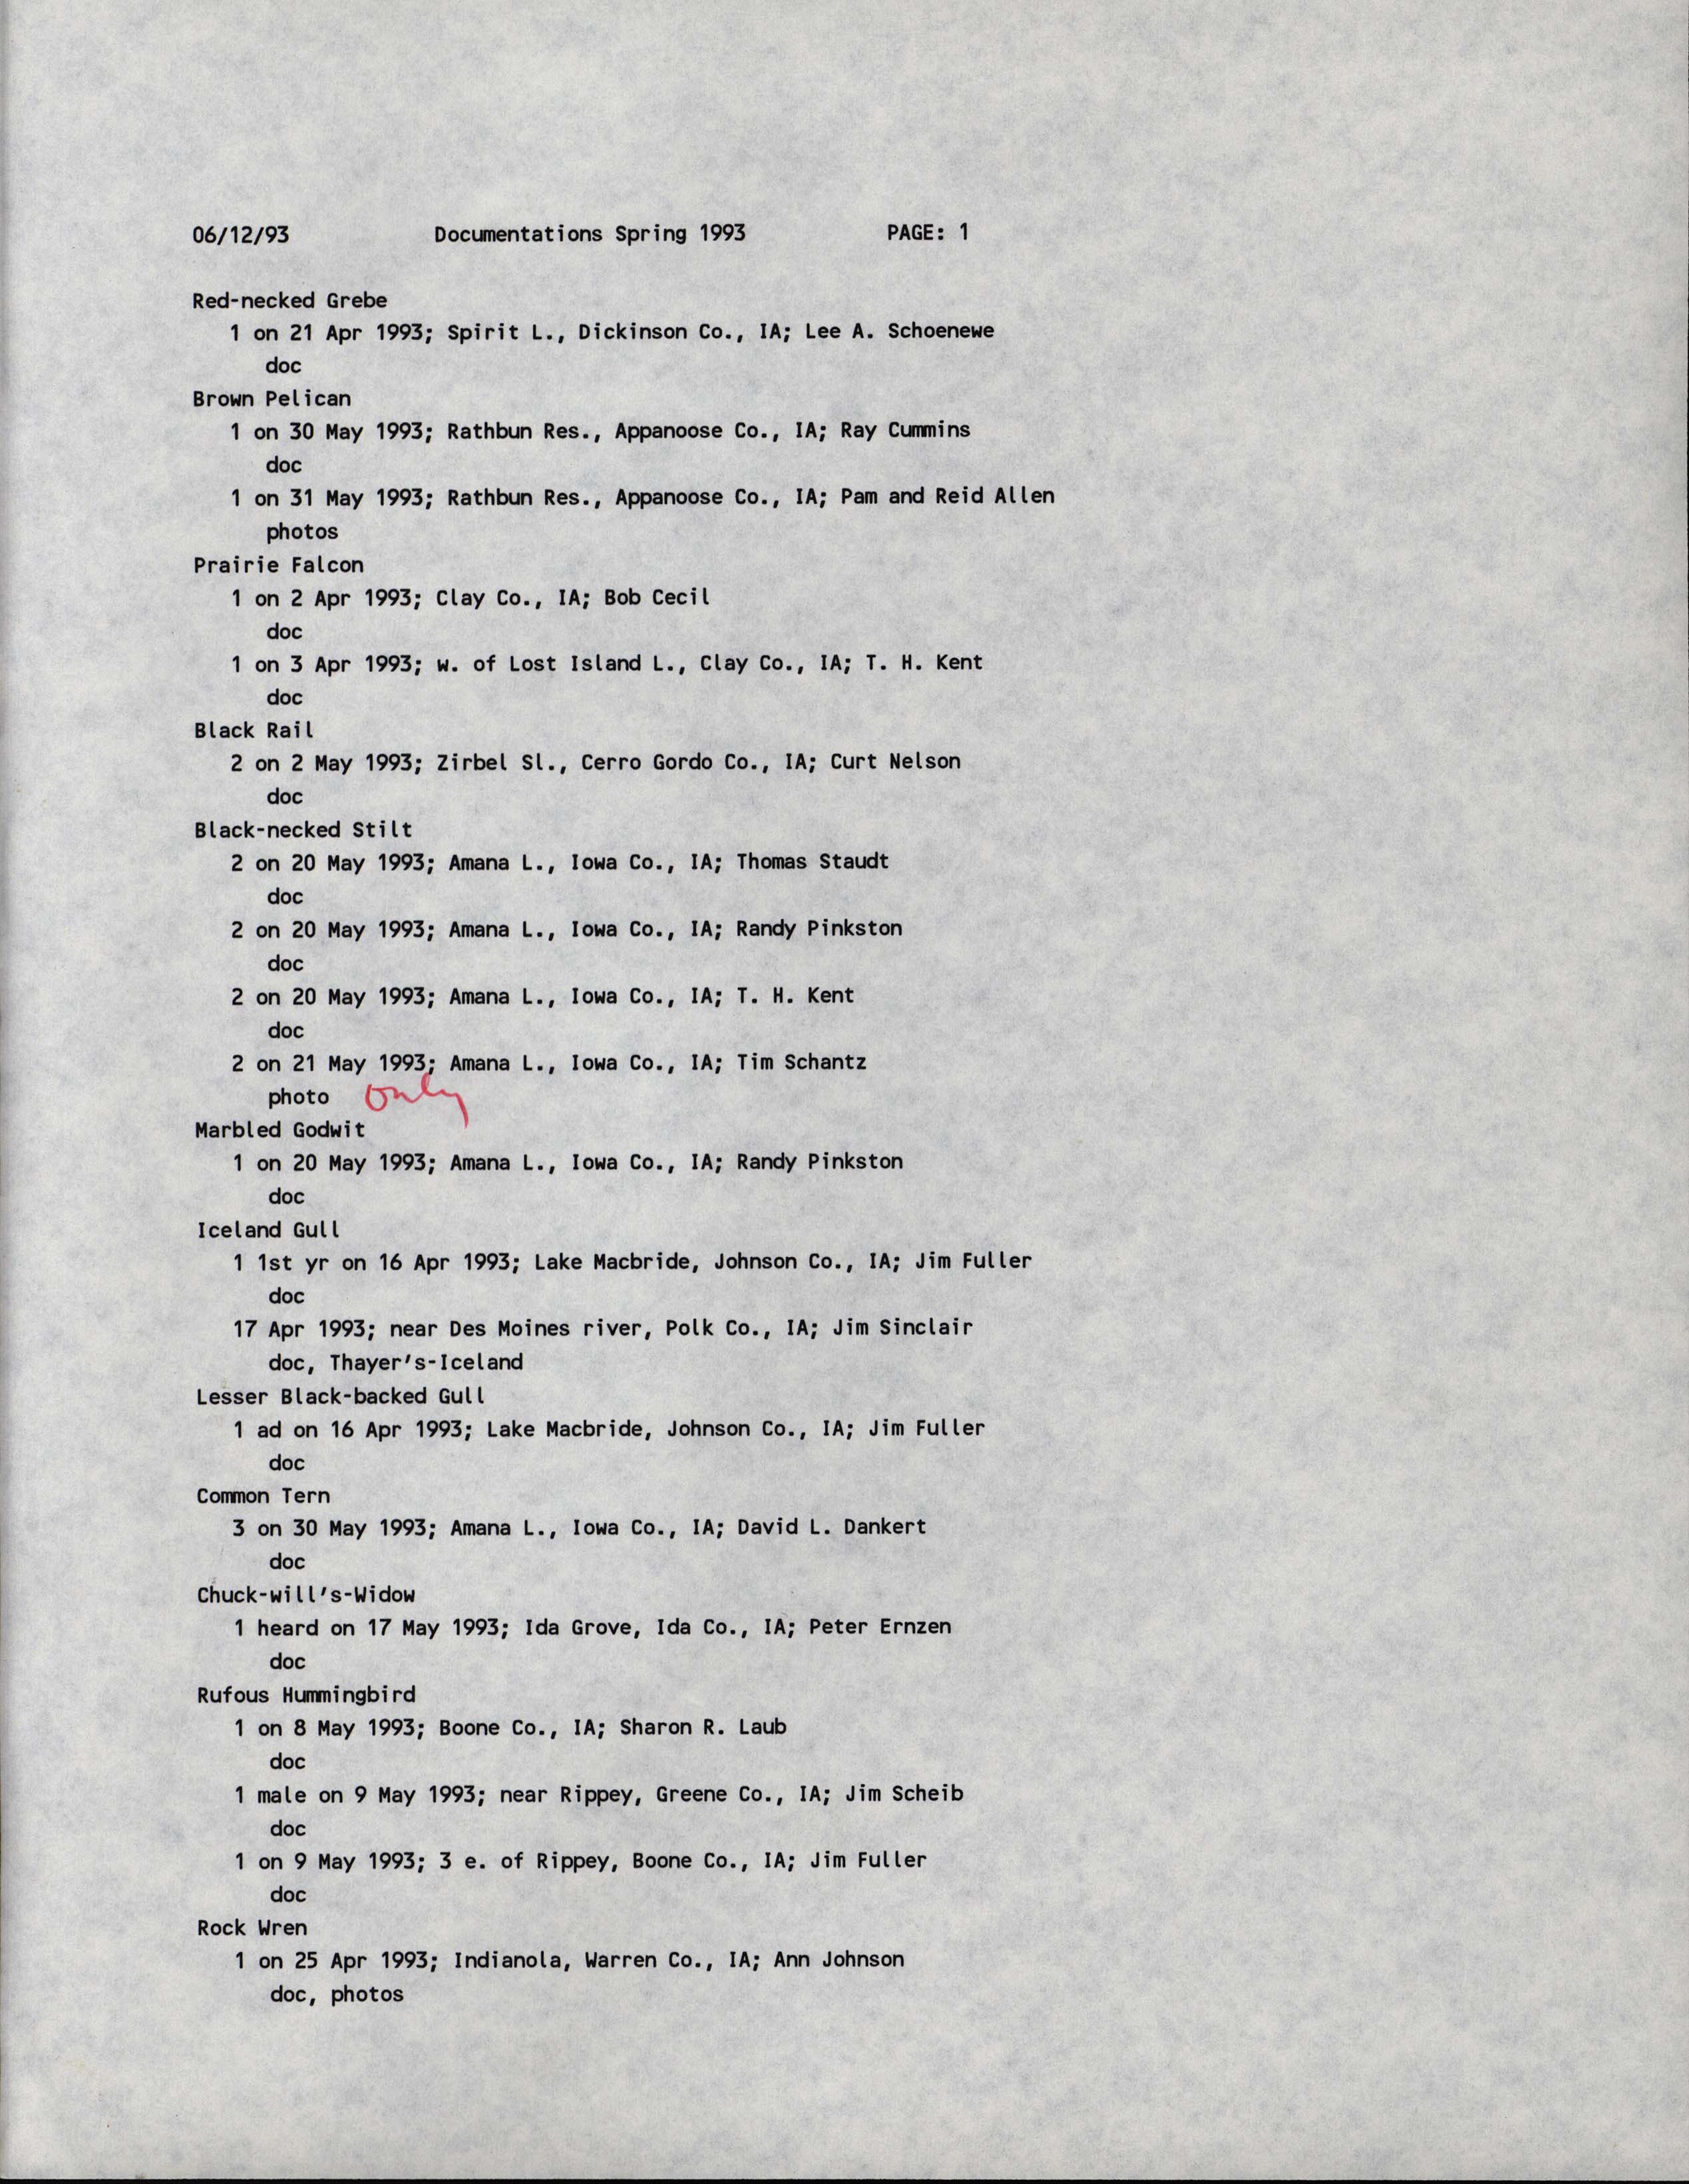 Documentations, Spring 1993